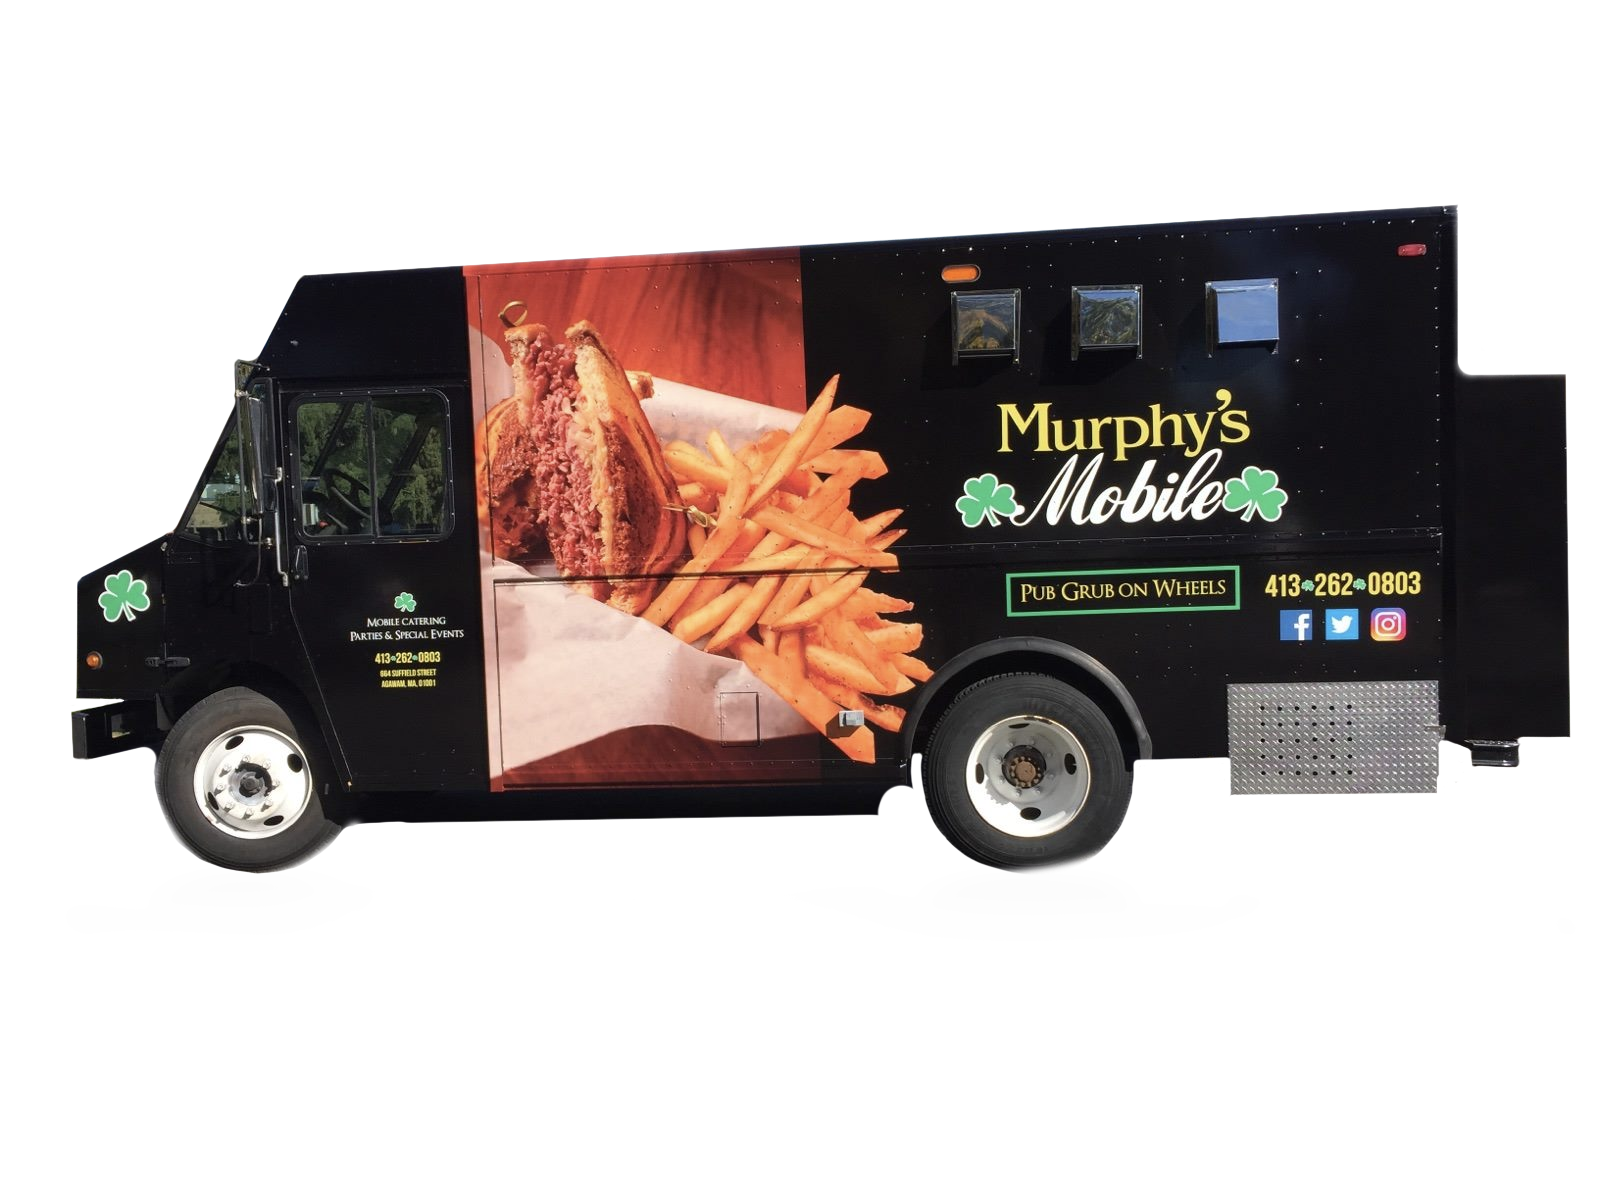 Murphys Mobile food truck